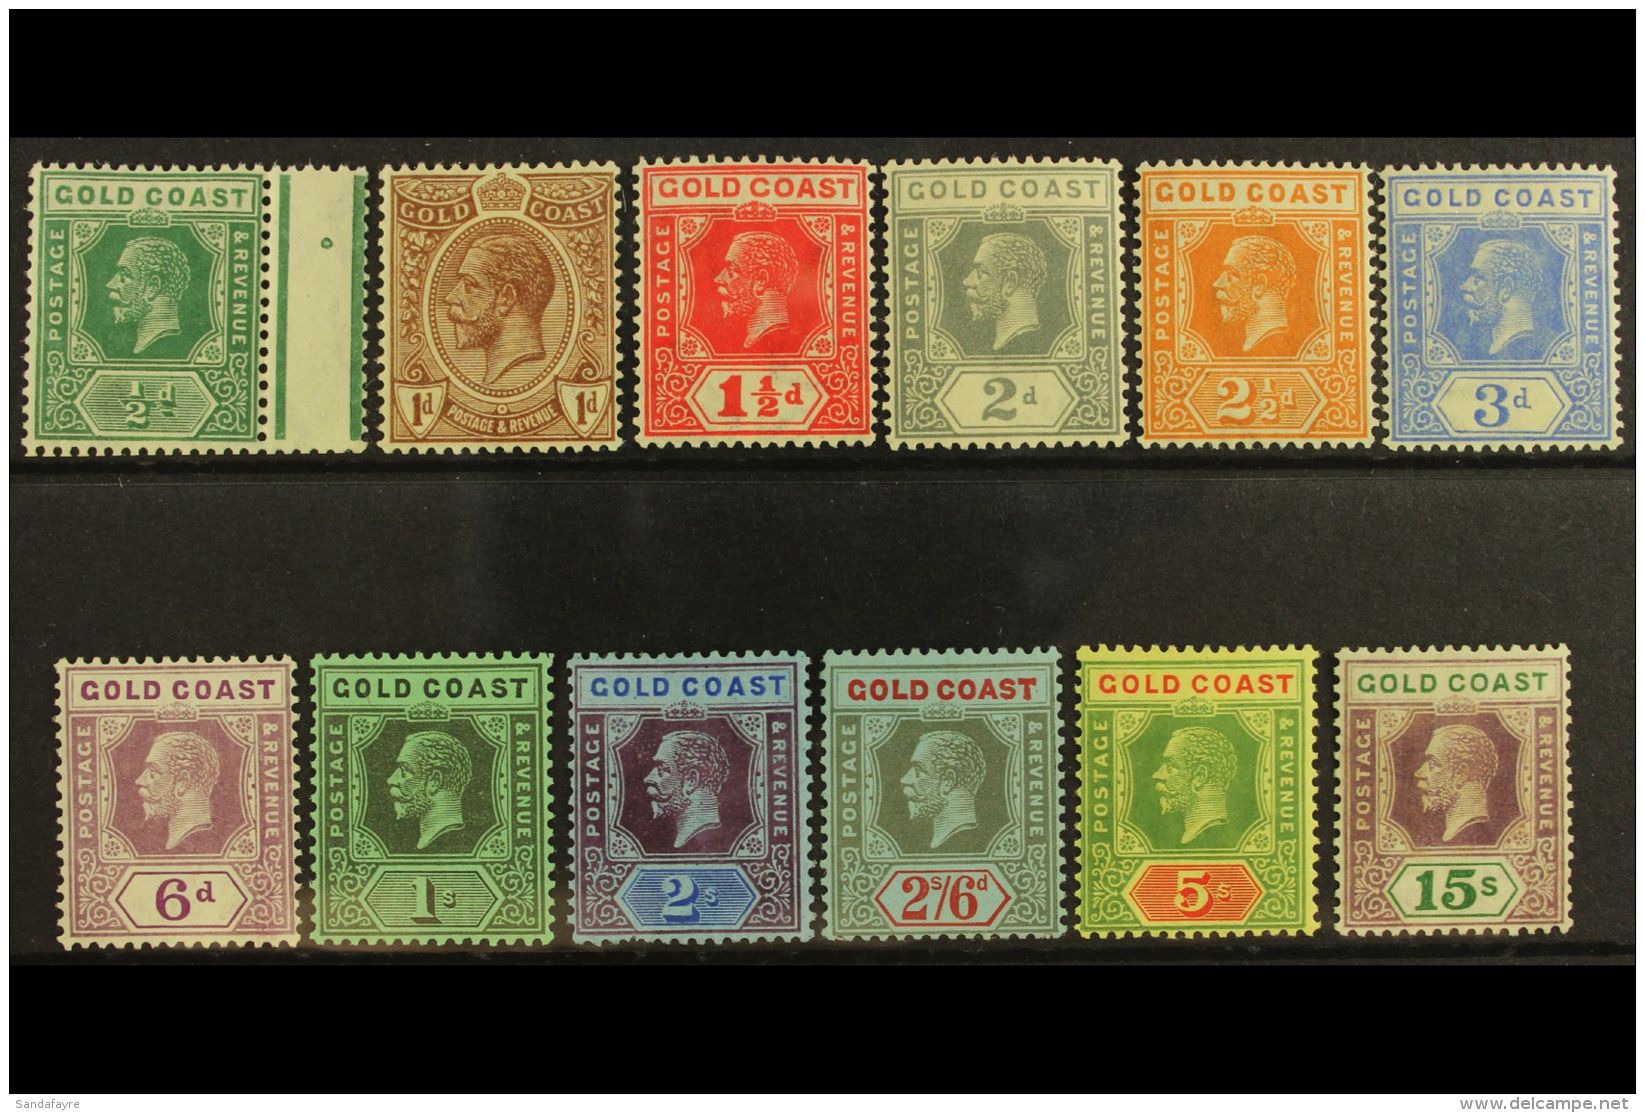 1921-24 (wmk Mult Script CA) Definitives Complete Set To 15s, SG 86/100a, Fine Mint, (12 Stamps) For More Images,... - Goudkust (...-1957)